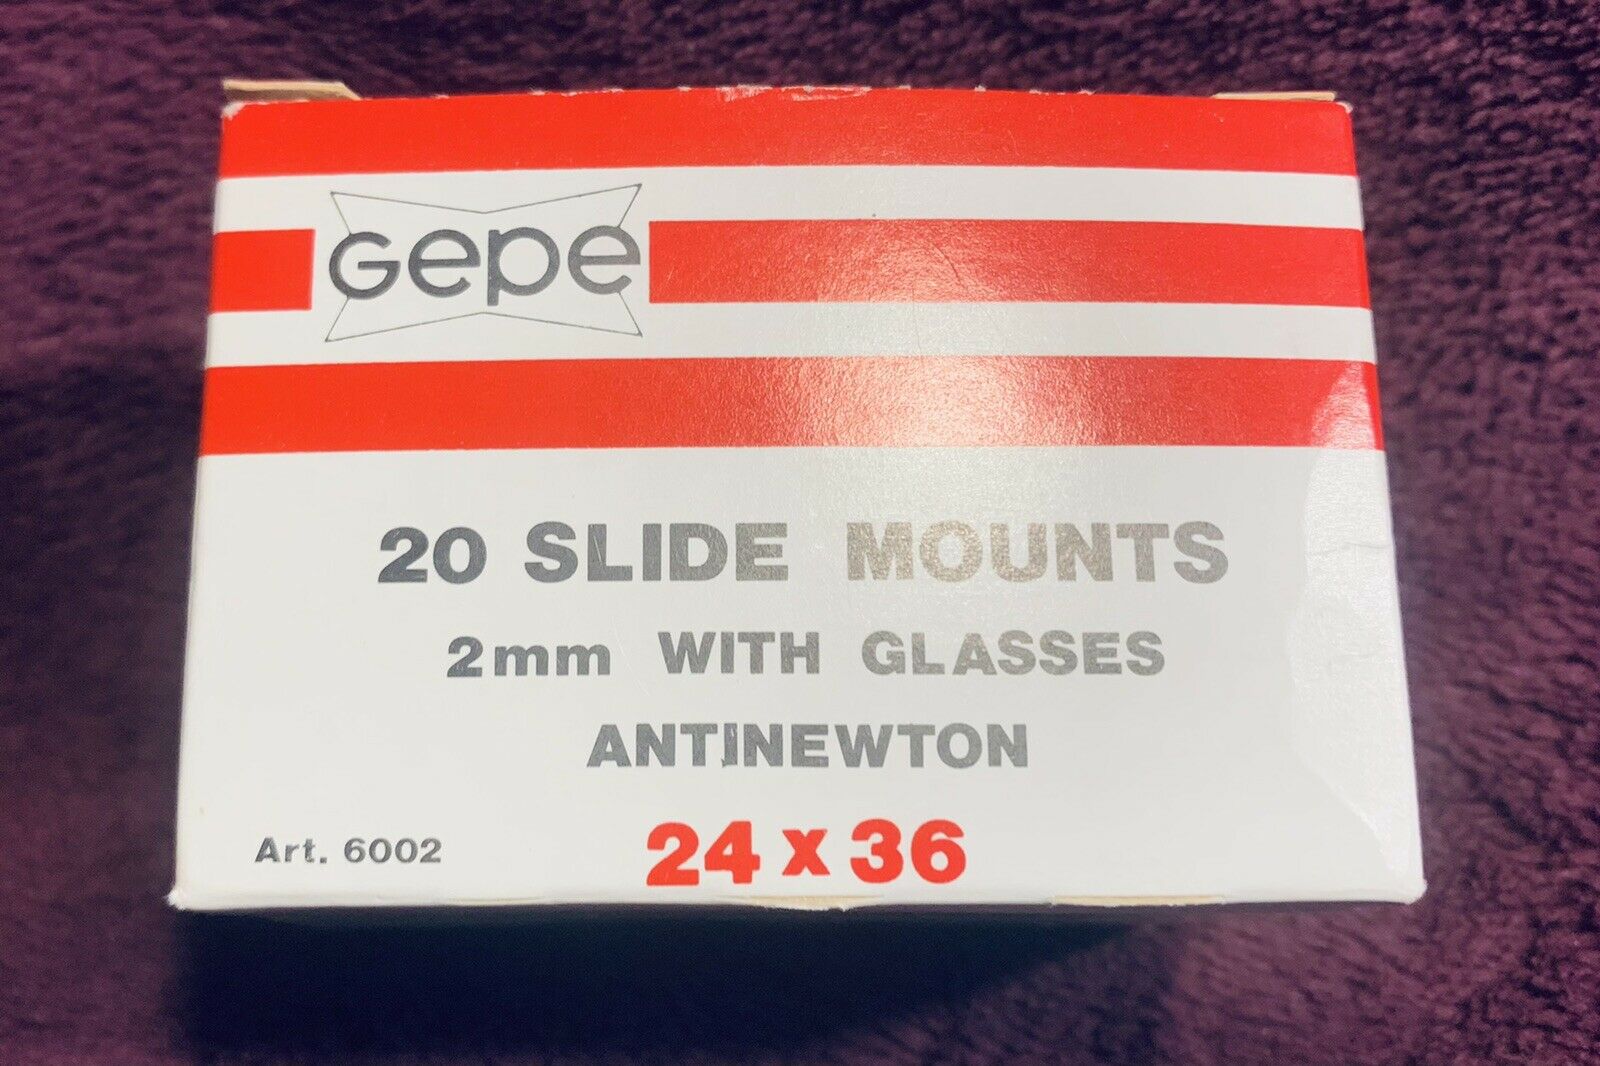 Gepe 20 Diarahmen 2mm Mit Glaser Antinewton 24x36 Art.6002   New In Box!